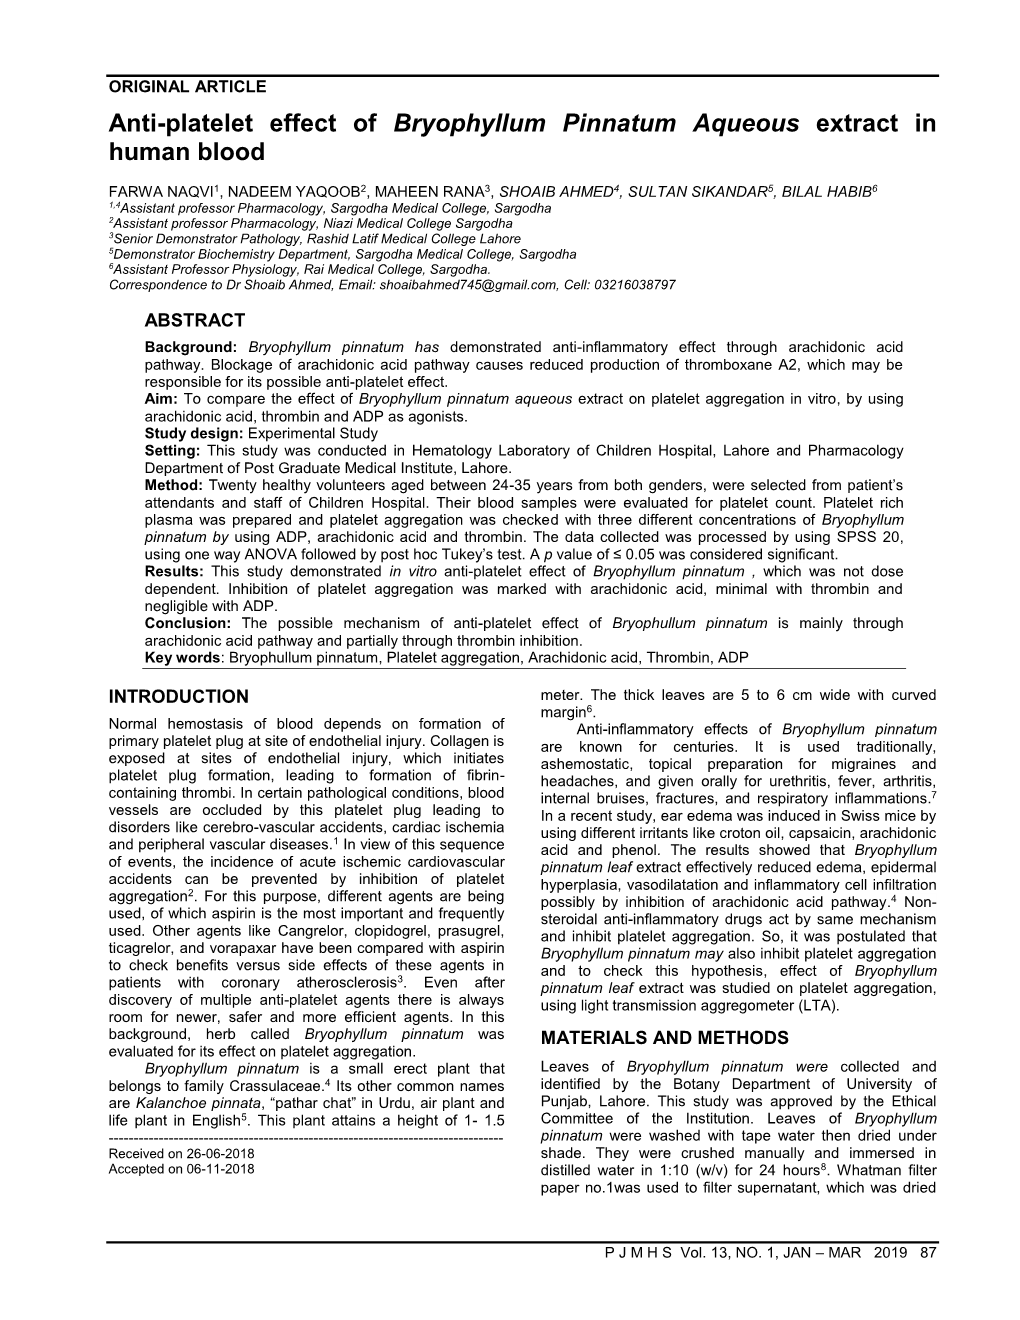 Anti-Platelet Effect of Bryophyllum Pinnatum Aqueous Extract in Human Blood